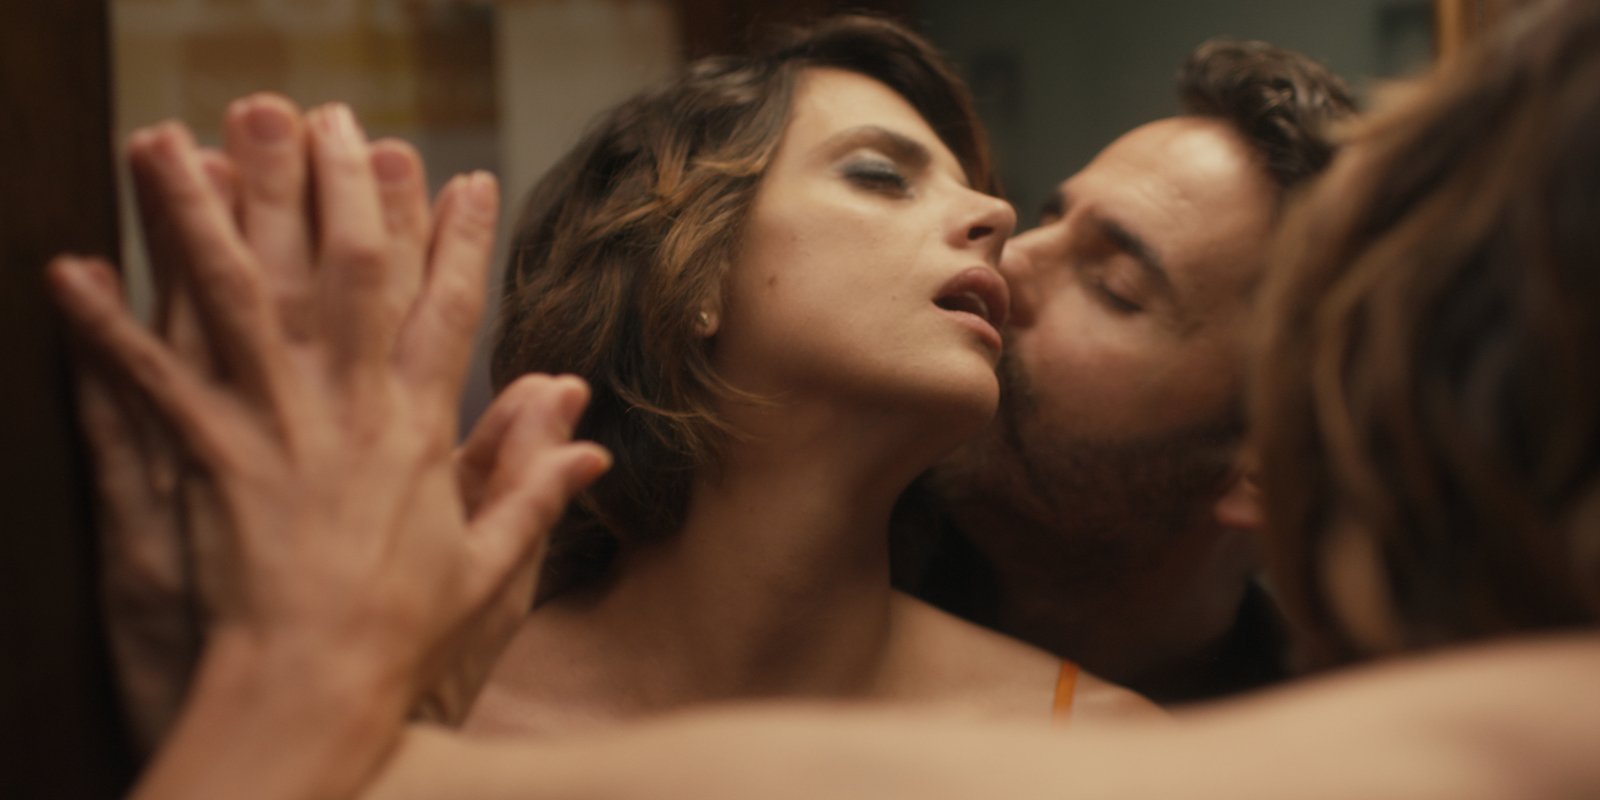 Peliculas de sexo mexicanas - 🧡 Películas eróticas mexicanas que te erizar...